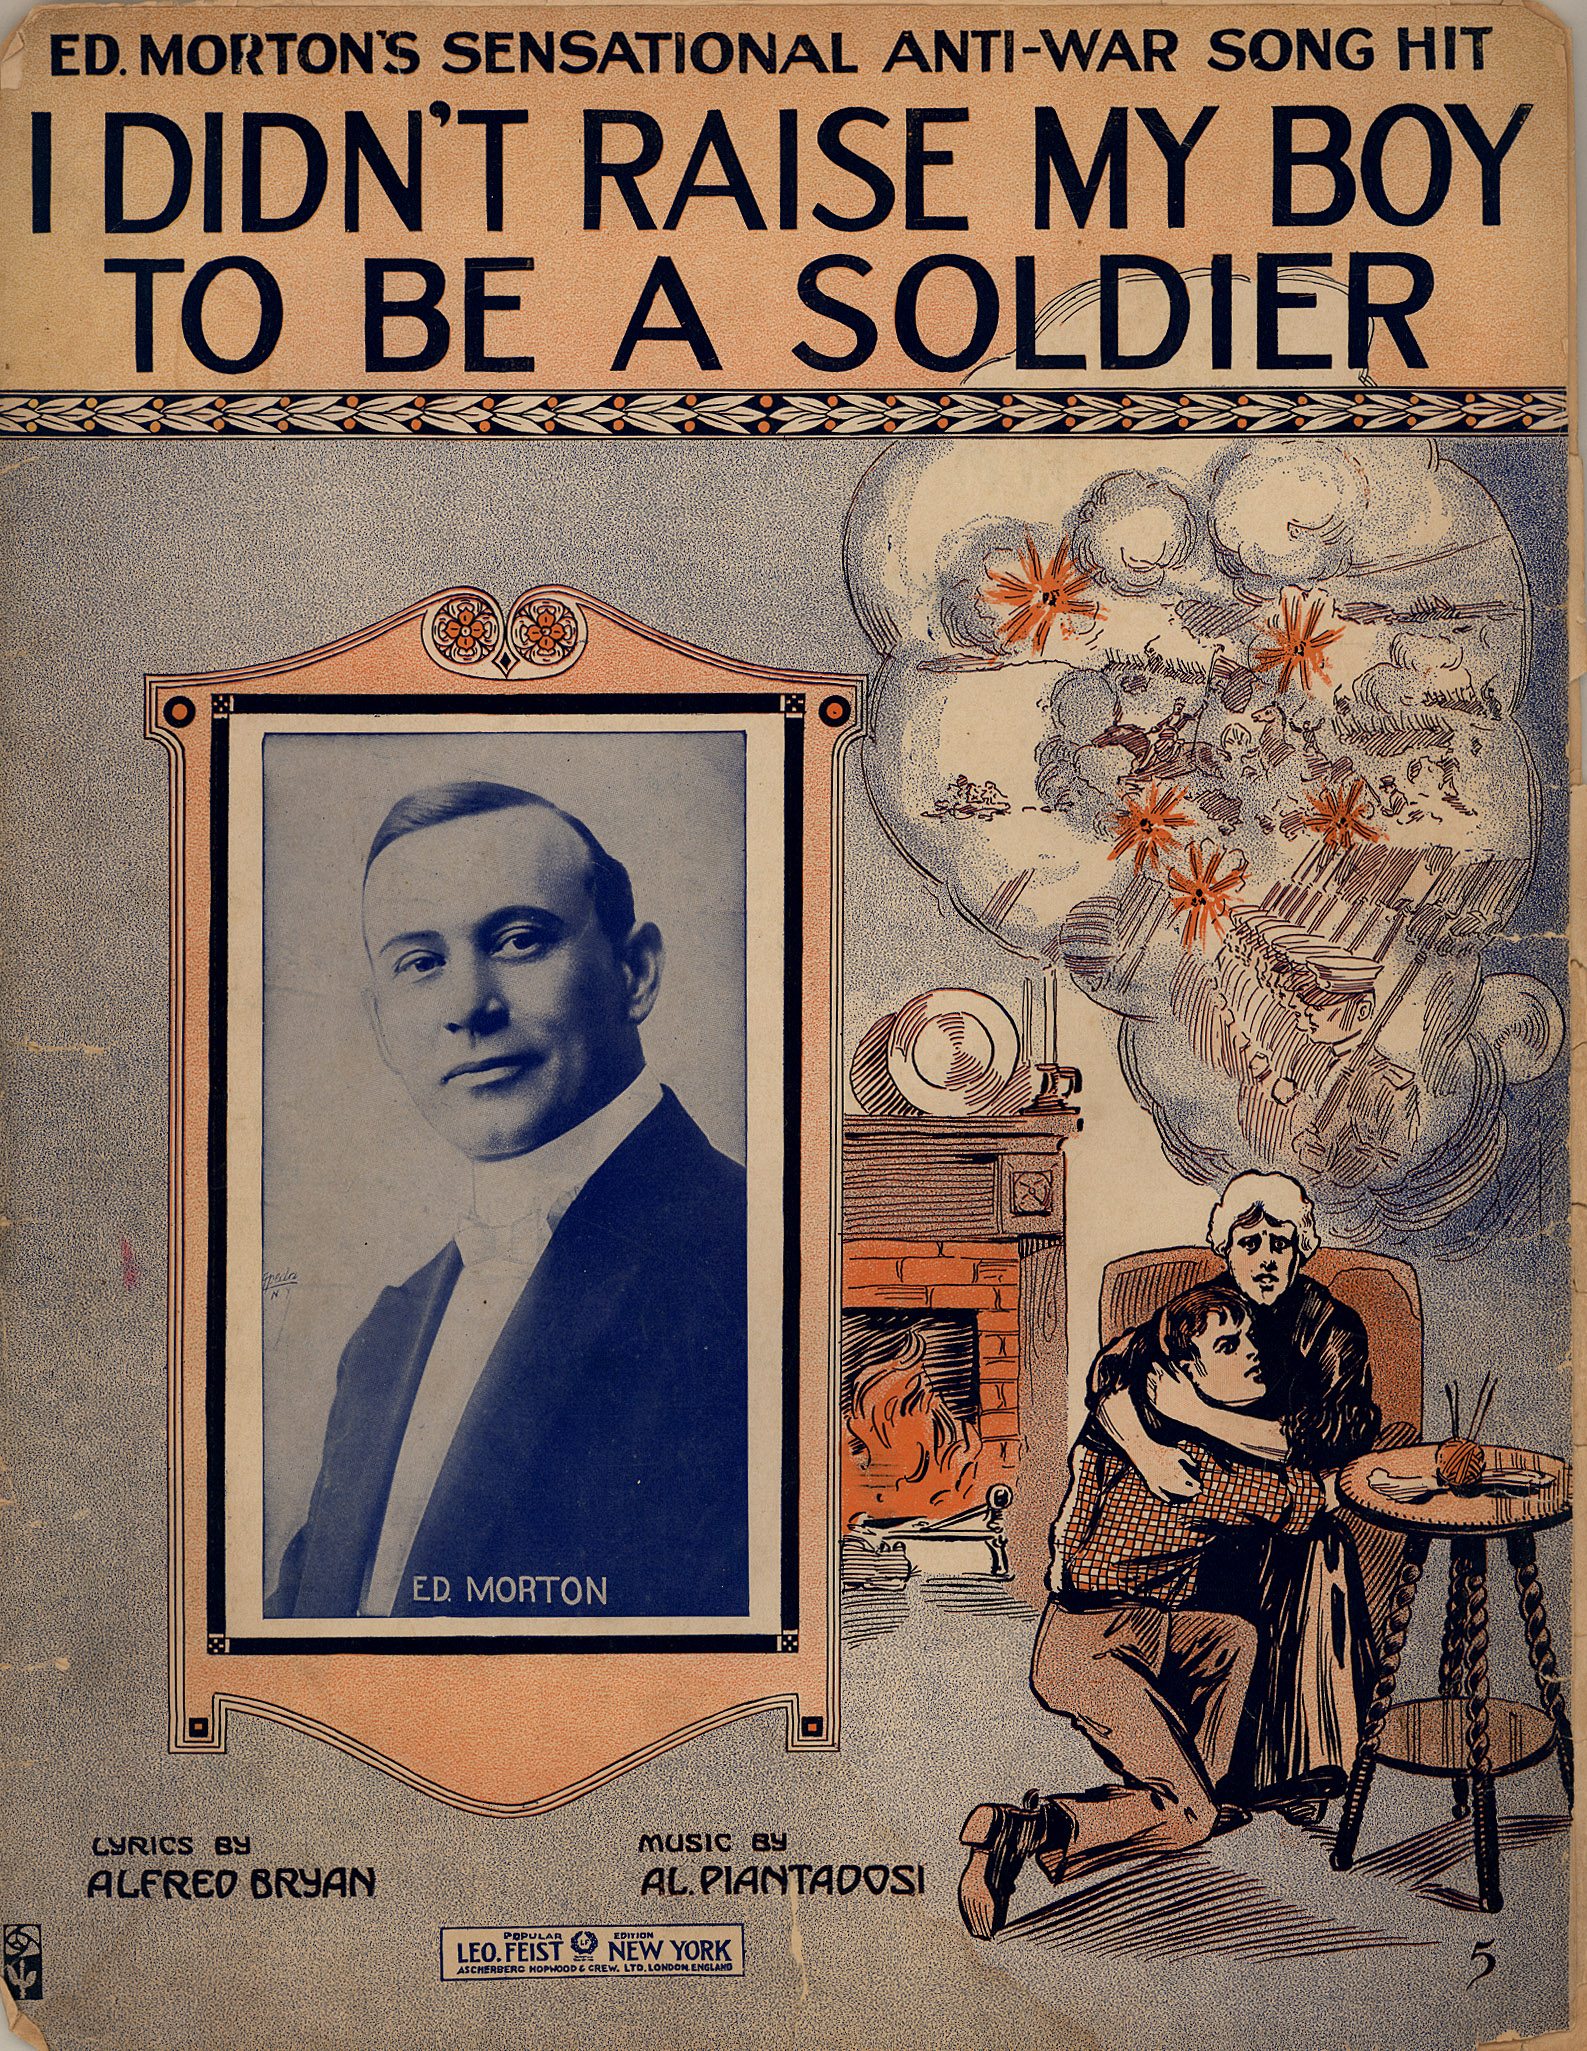 Anti-war propaganda poster, popular song.